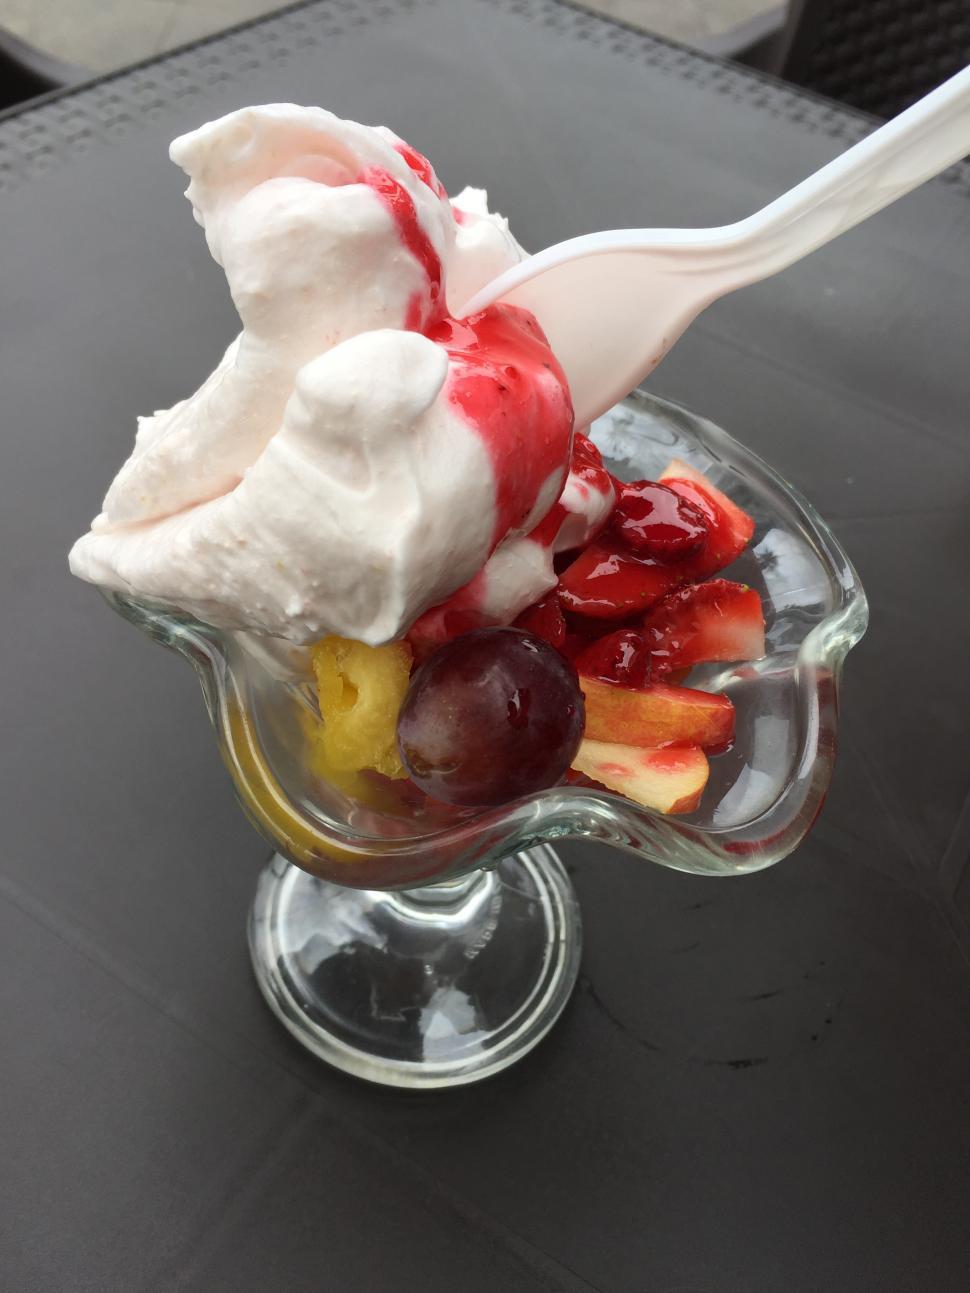 Free Image of Cream topped fruit dessert 